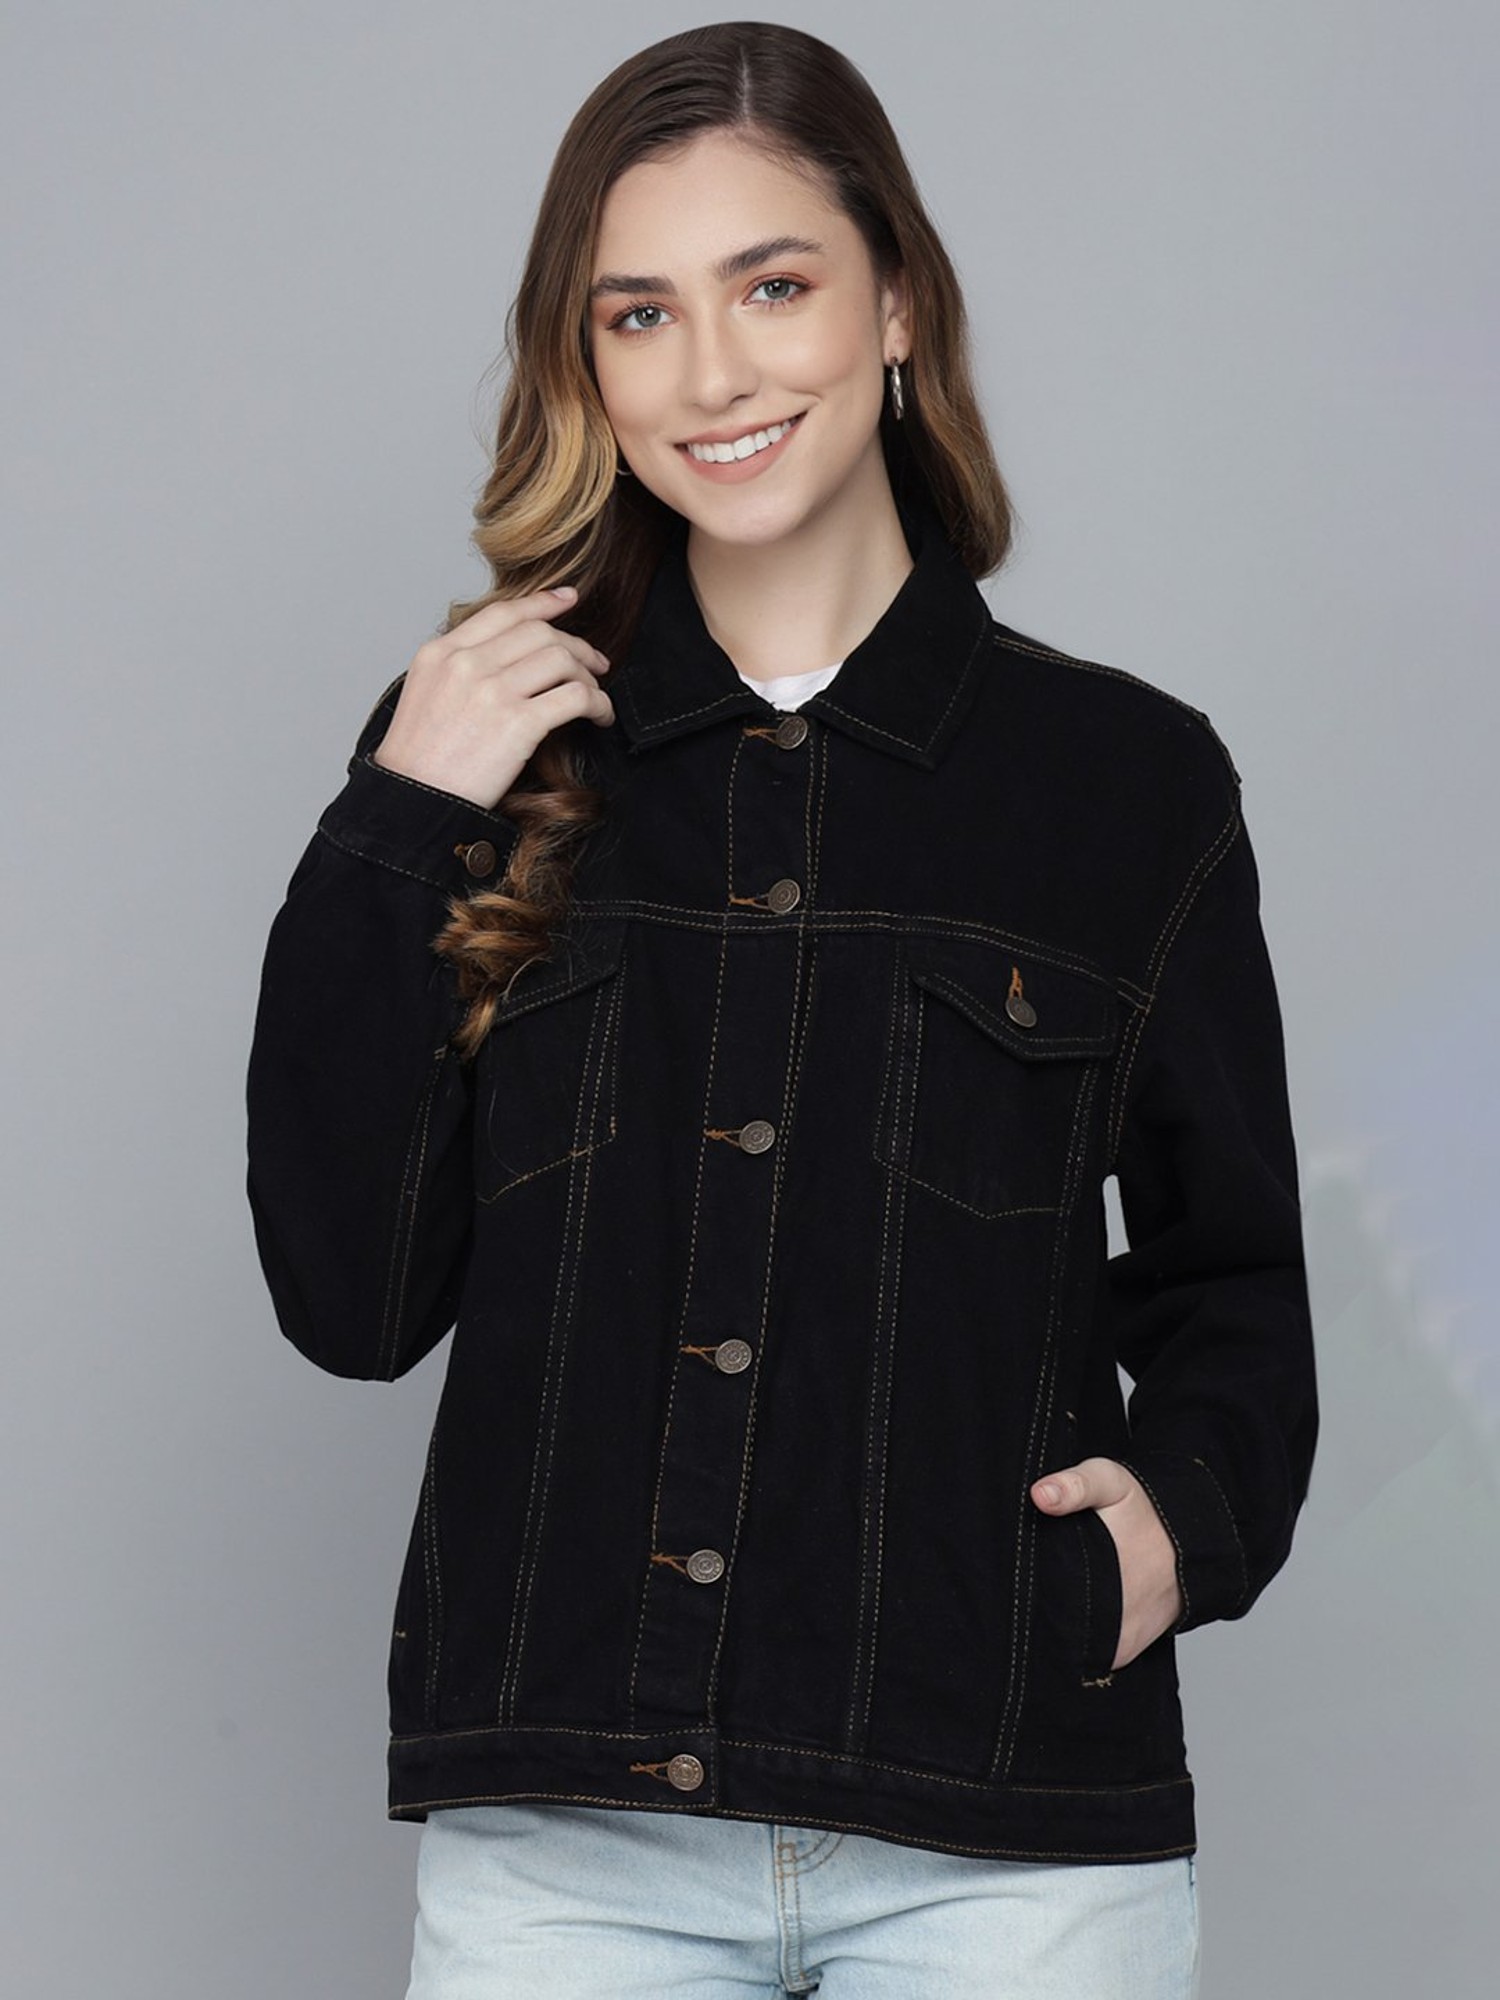 Buy KOTTY Black Full Sleeve Solid Women's Jacket online